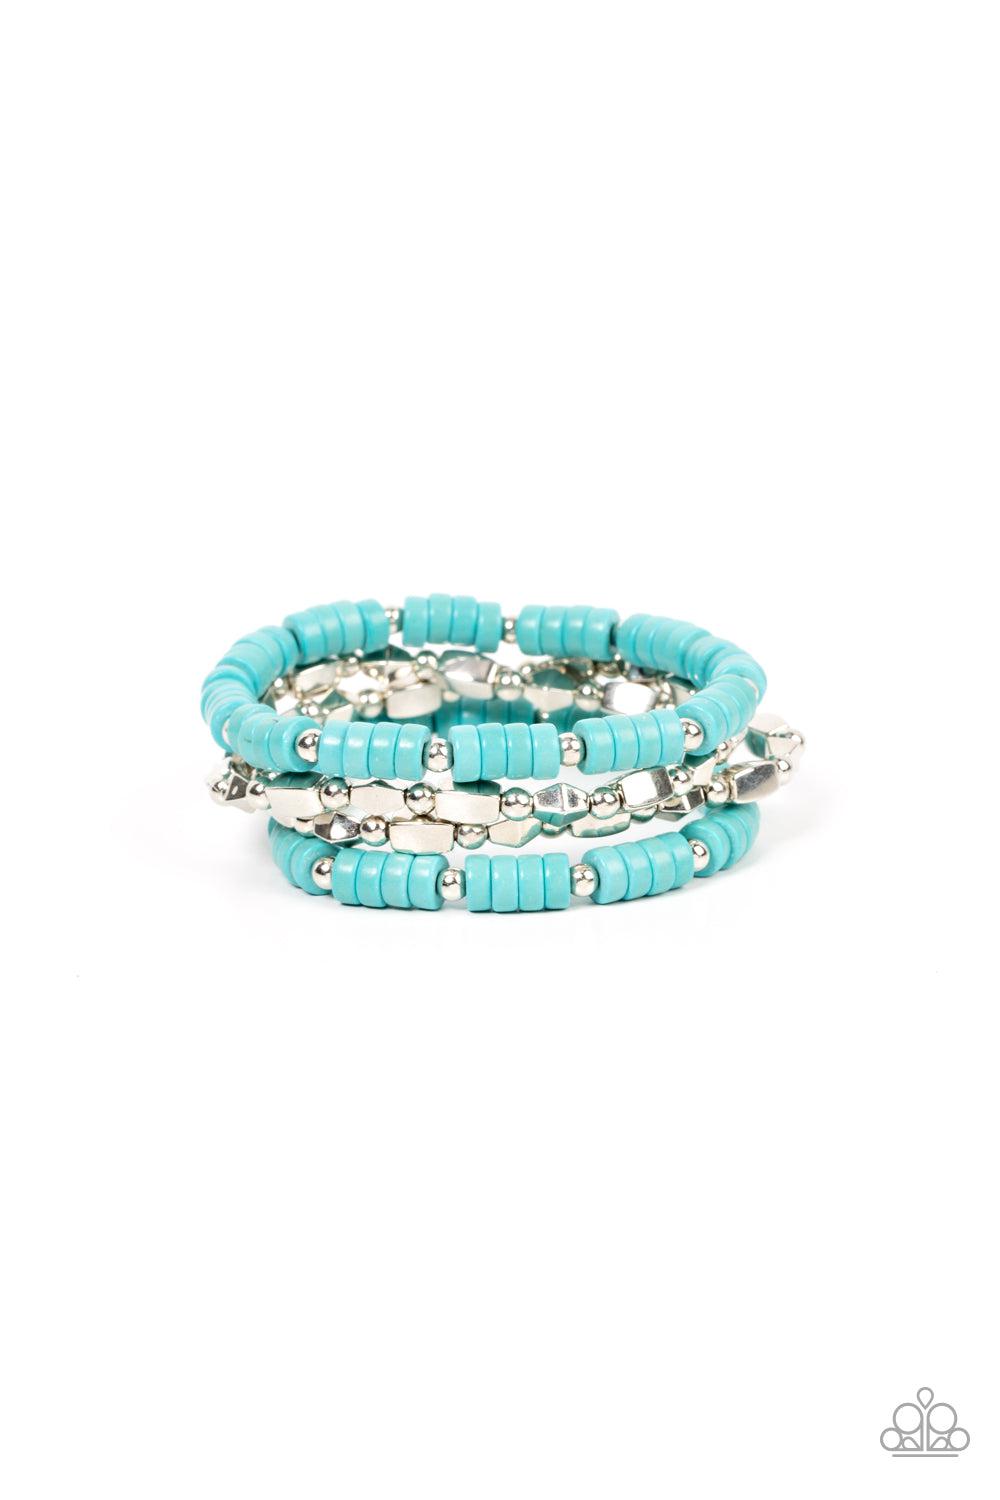 Anasazi Apothecary Turquoise Blue Stone Bracelet - Paparazzi Accessories- lightbox - CarasShop.com - $5 Jewelry by Cara Jewels